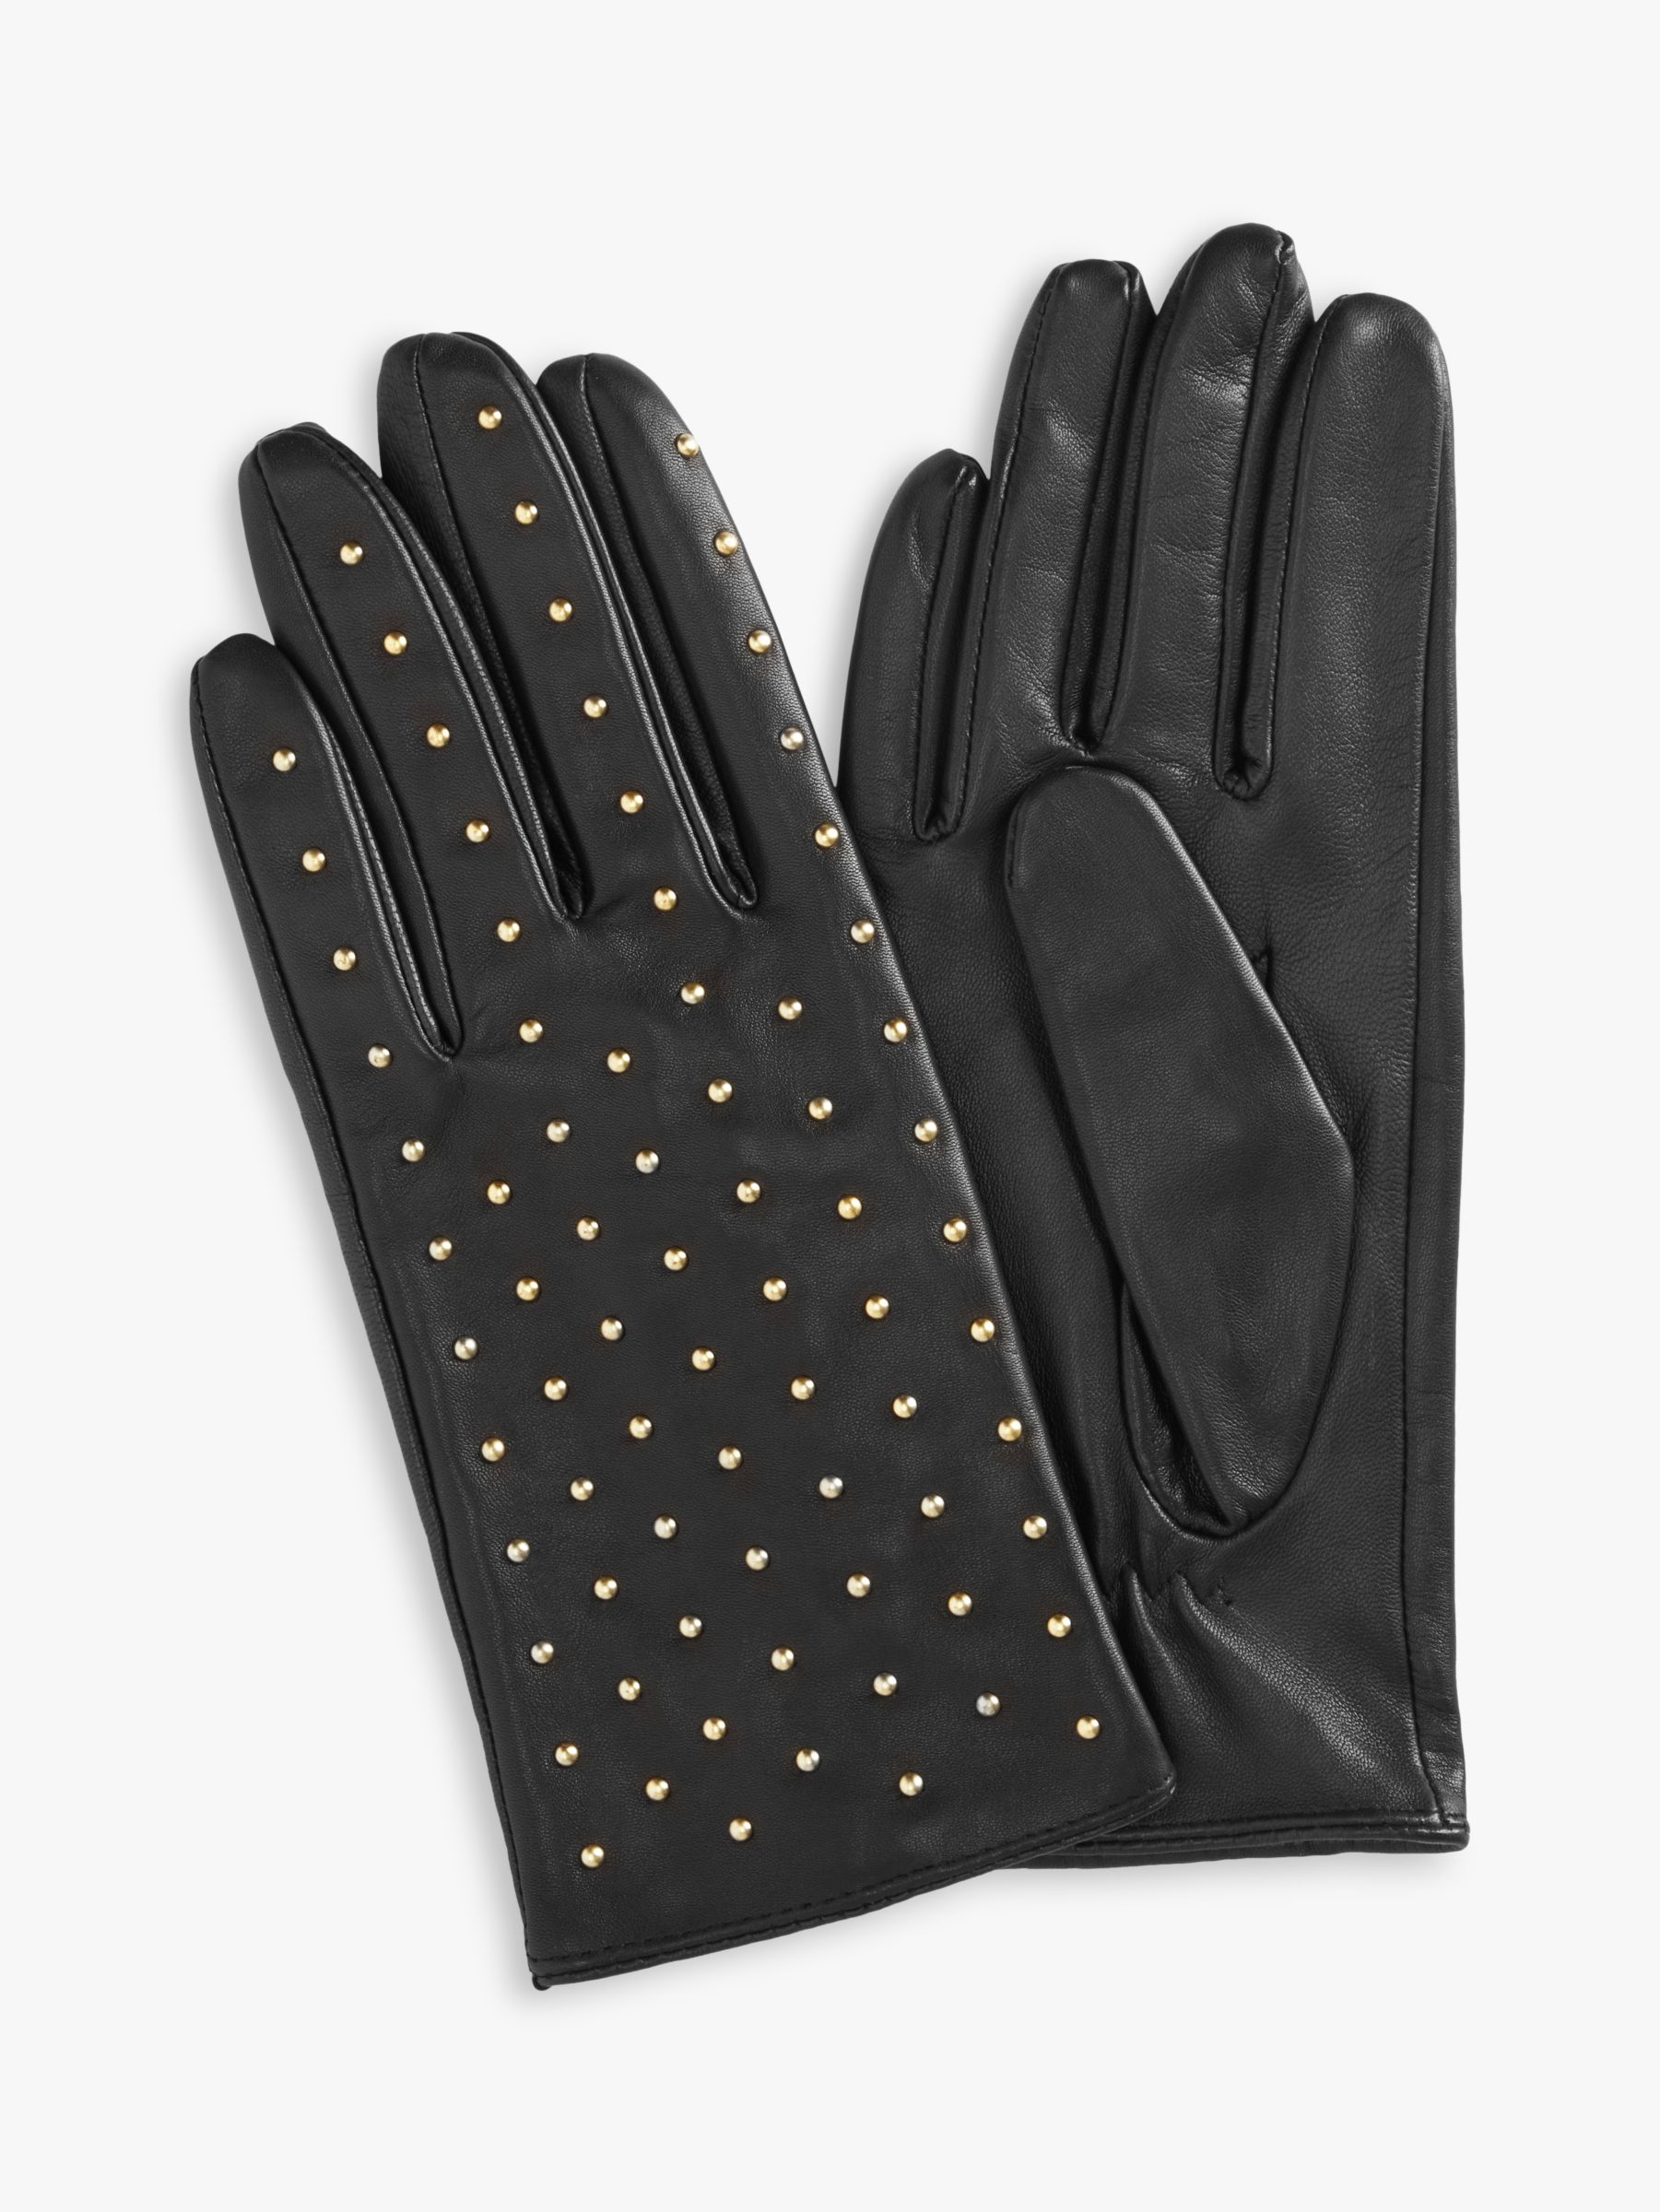 John Lewis Studded Leather Gloves, Black/Gold £40.00